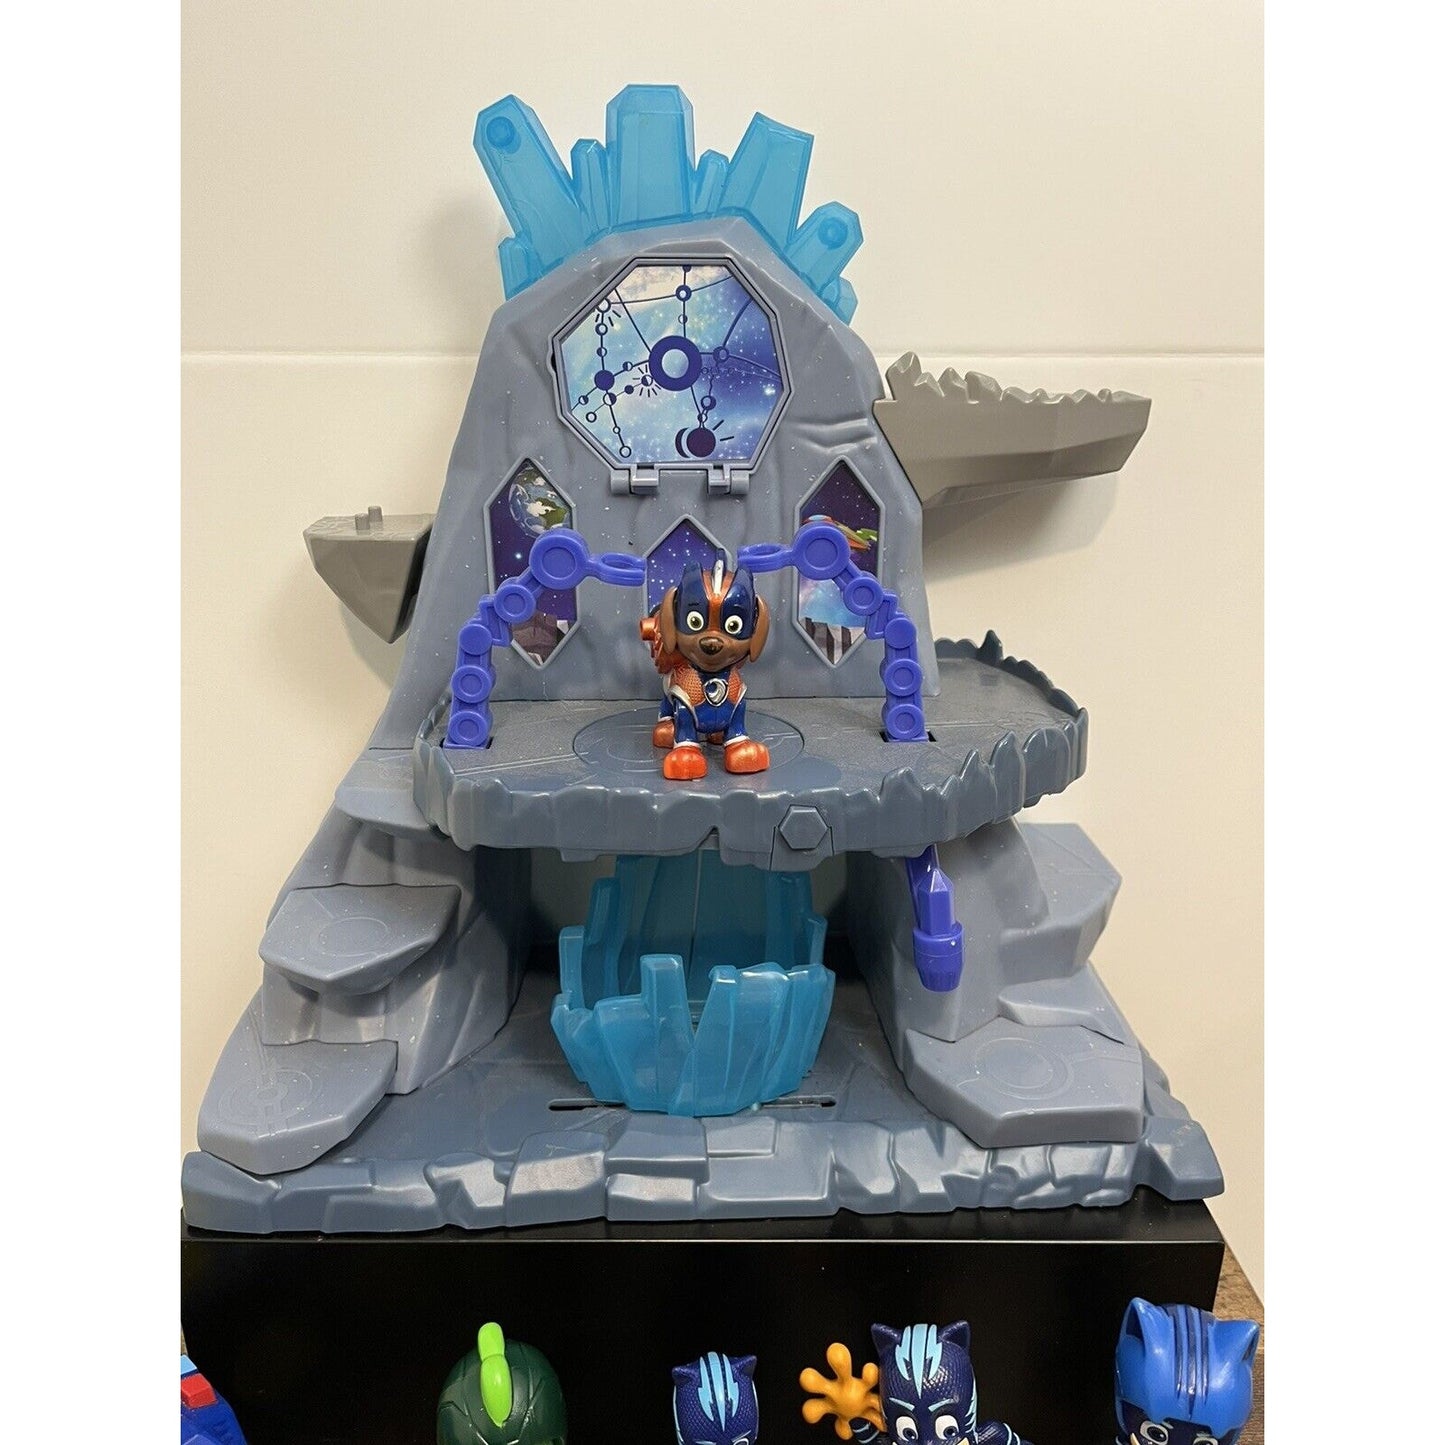 Disney PJ Masks Super Moon Adventure Playset w/ Figures And Vehicle